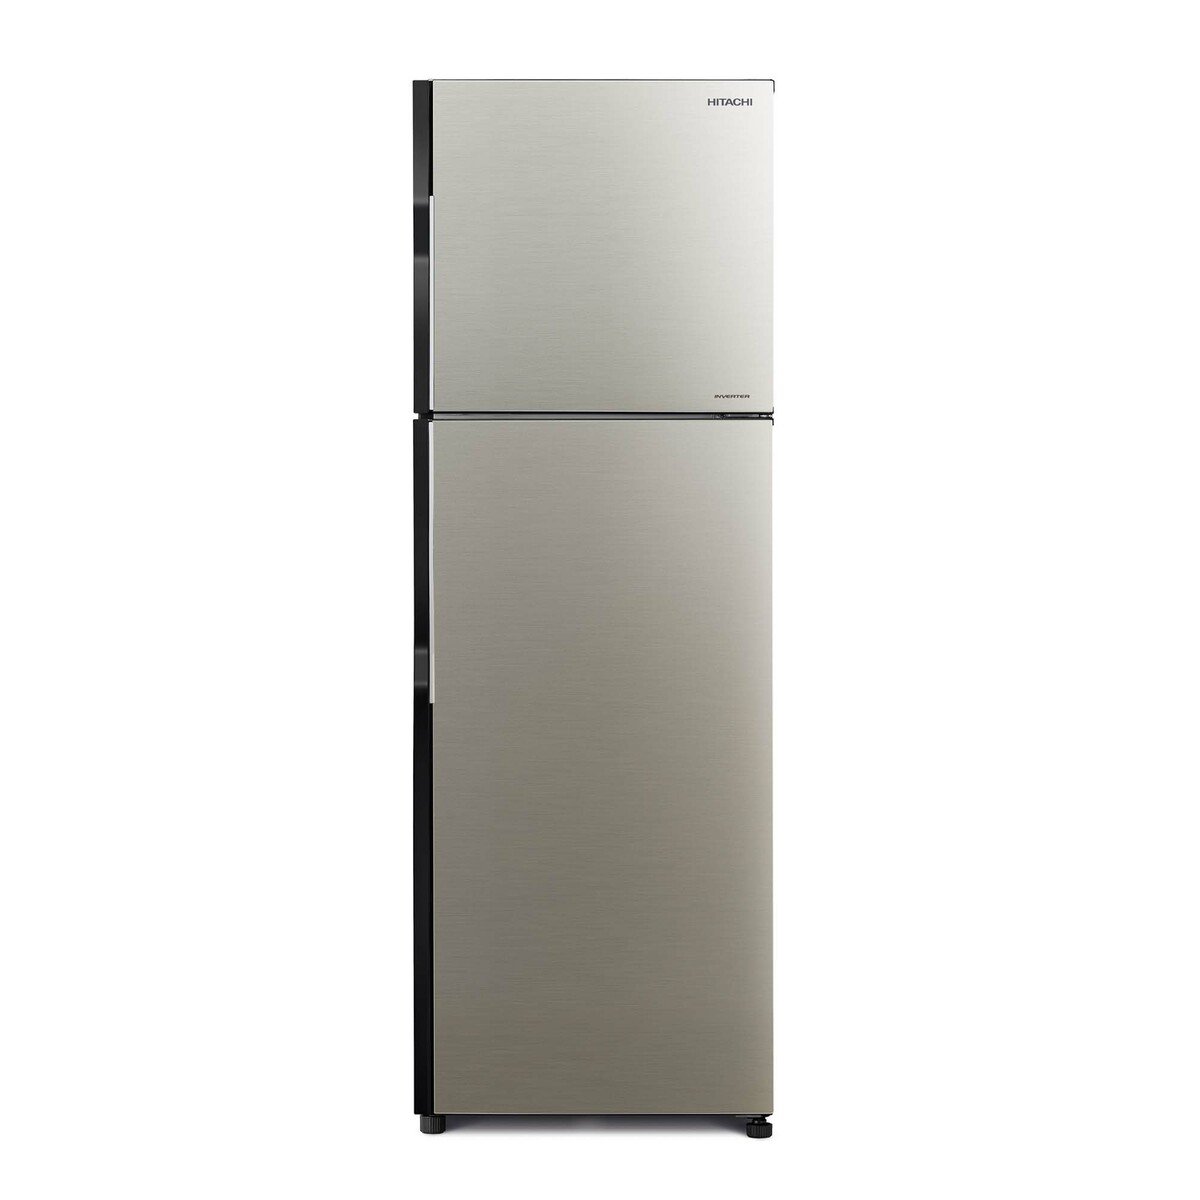 Hitachi Double Door Refrigerator RH330PUK7KBSL 230LTR